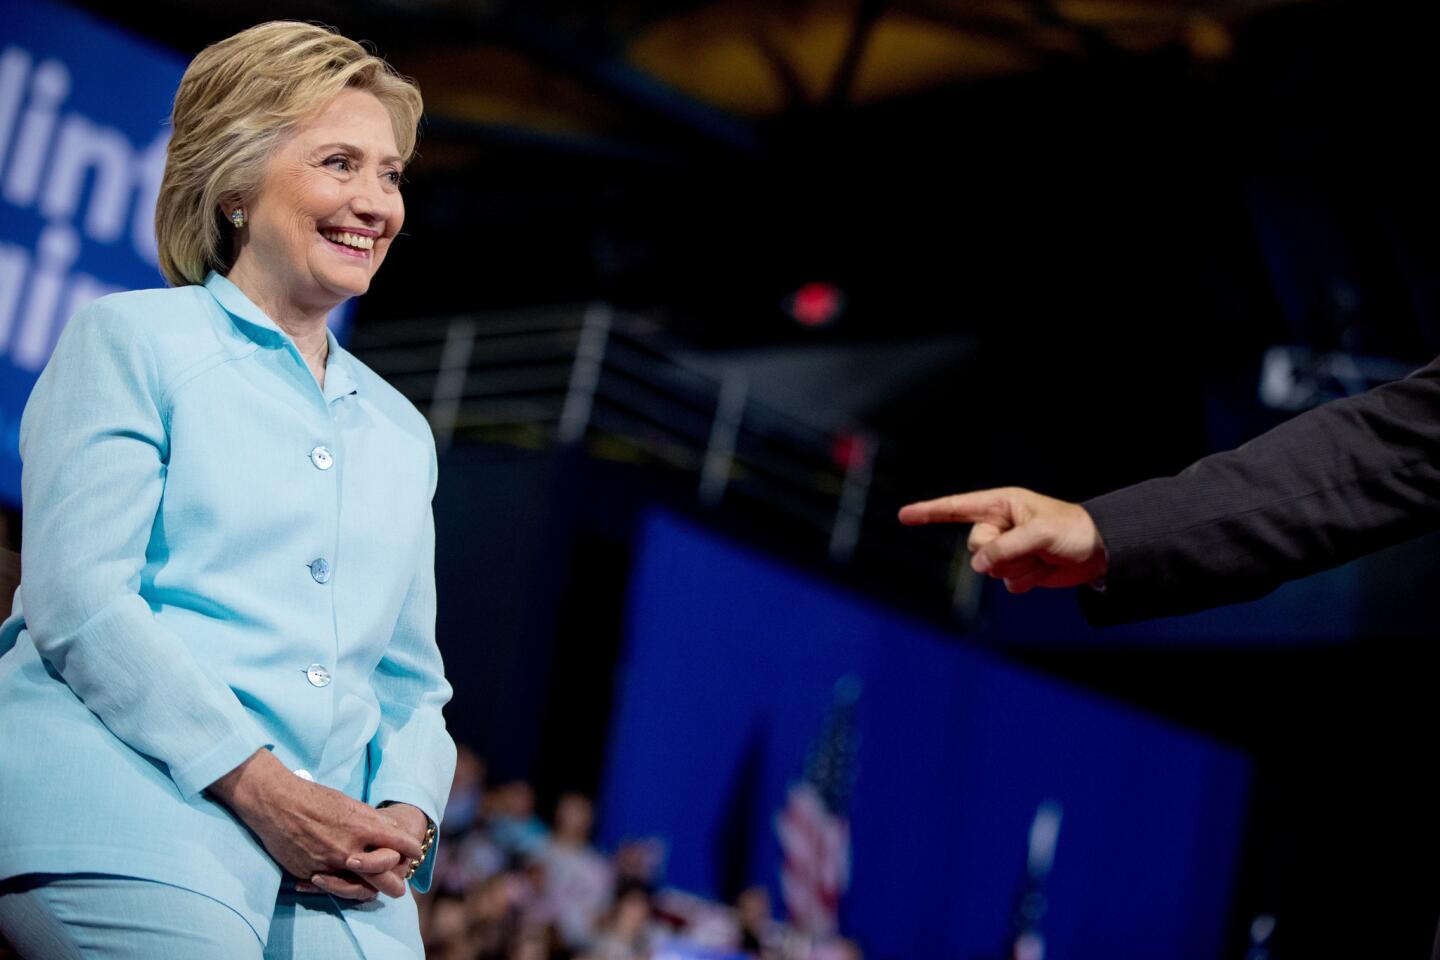 Clinton/Kaine ticket debuts in Florida